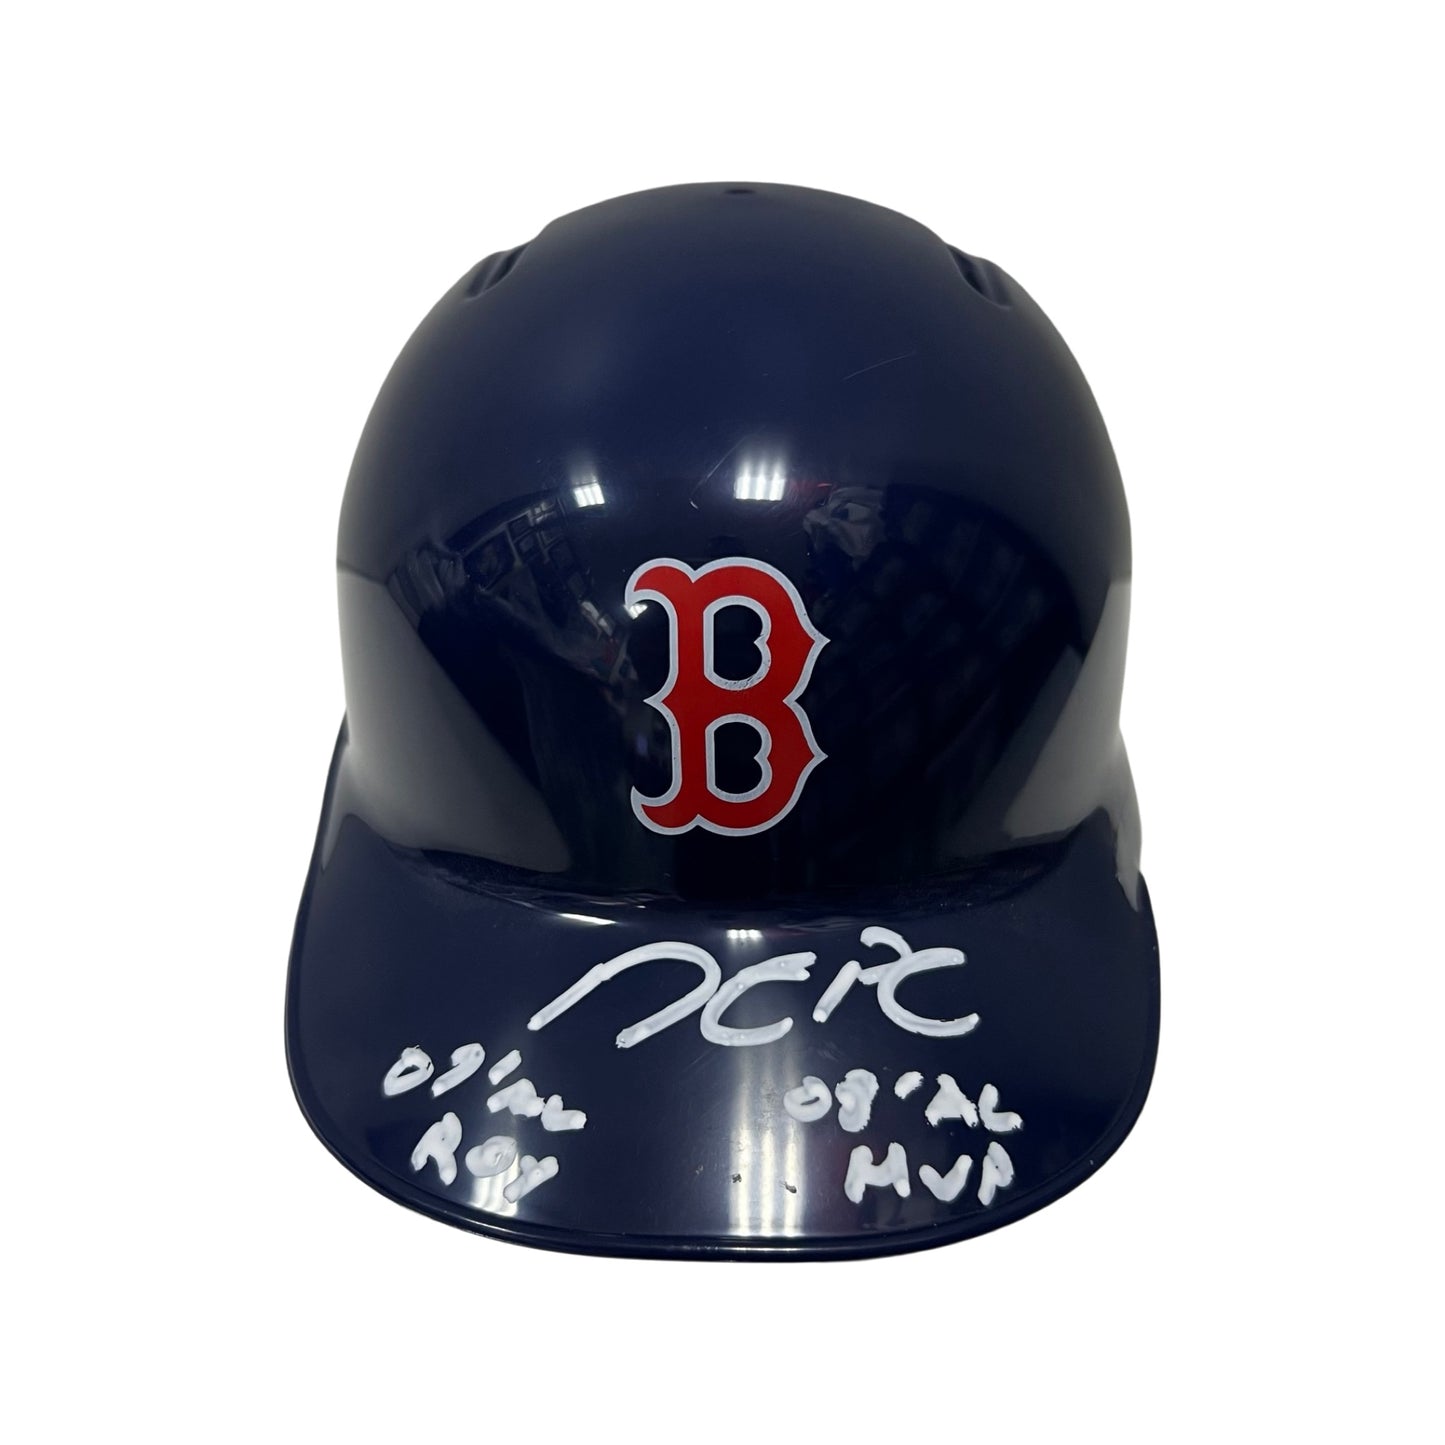 Dustin Pedroia Autographed Boston Red Sox Mini Helmet “07 AL ROY, 08 AL MVP” Inscriptions Steiner CX